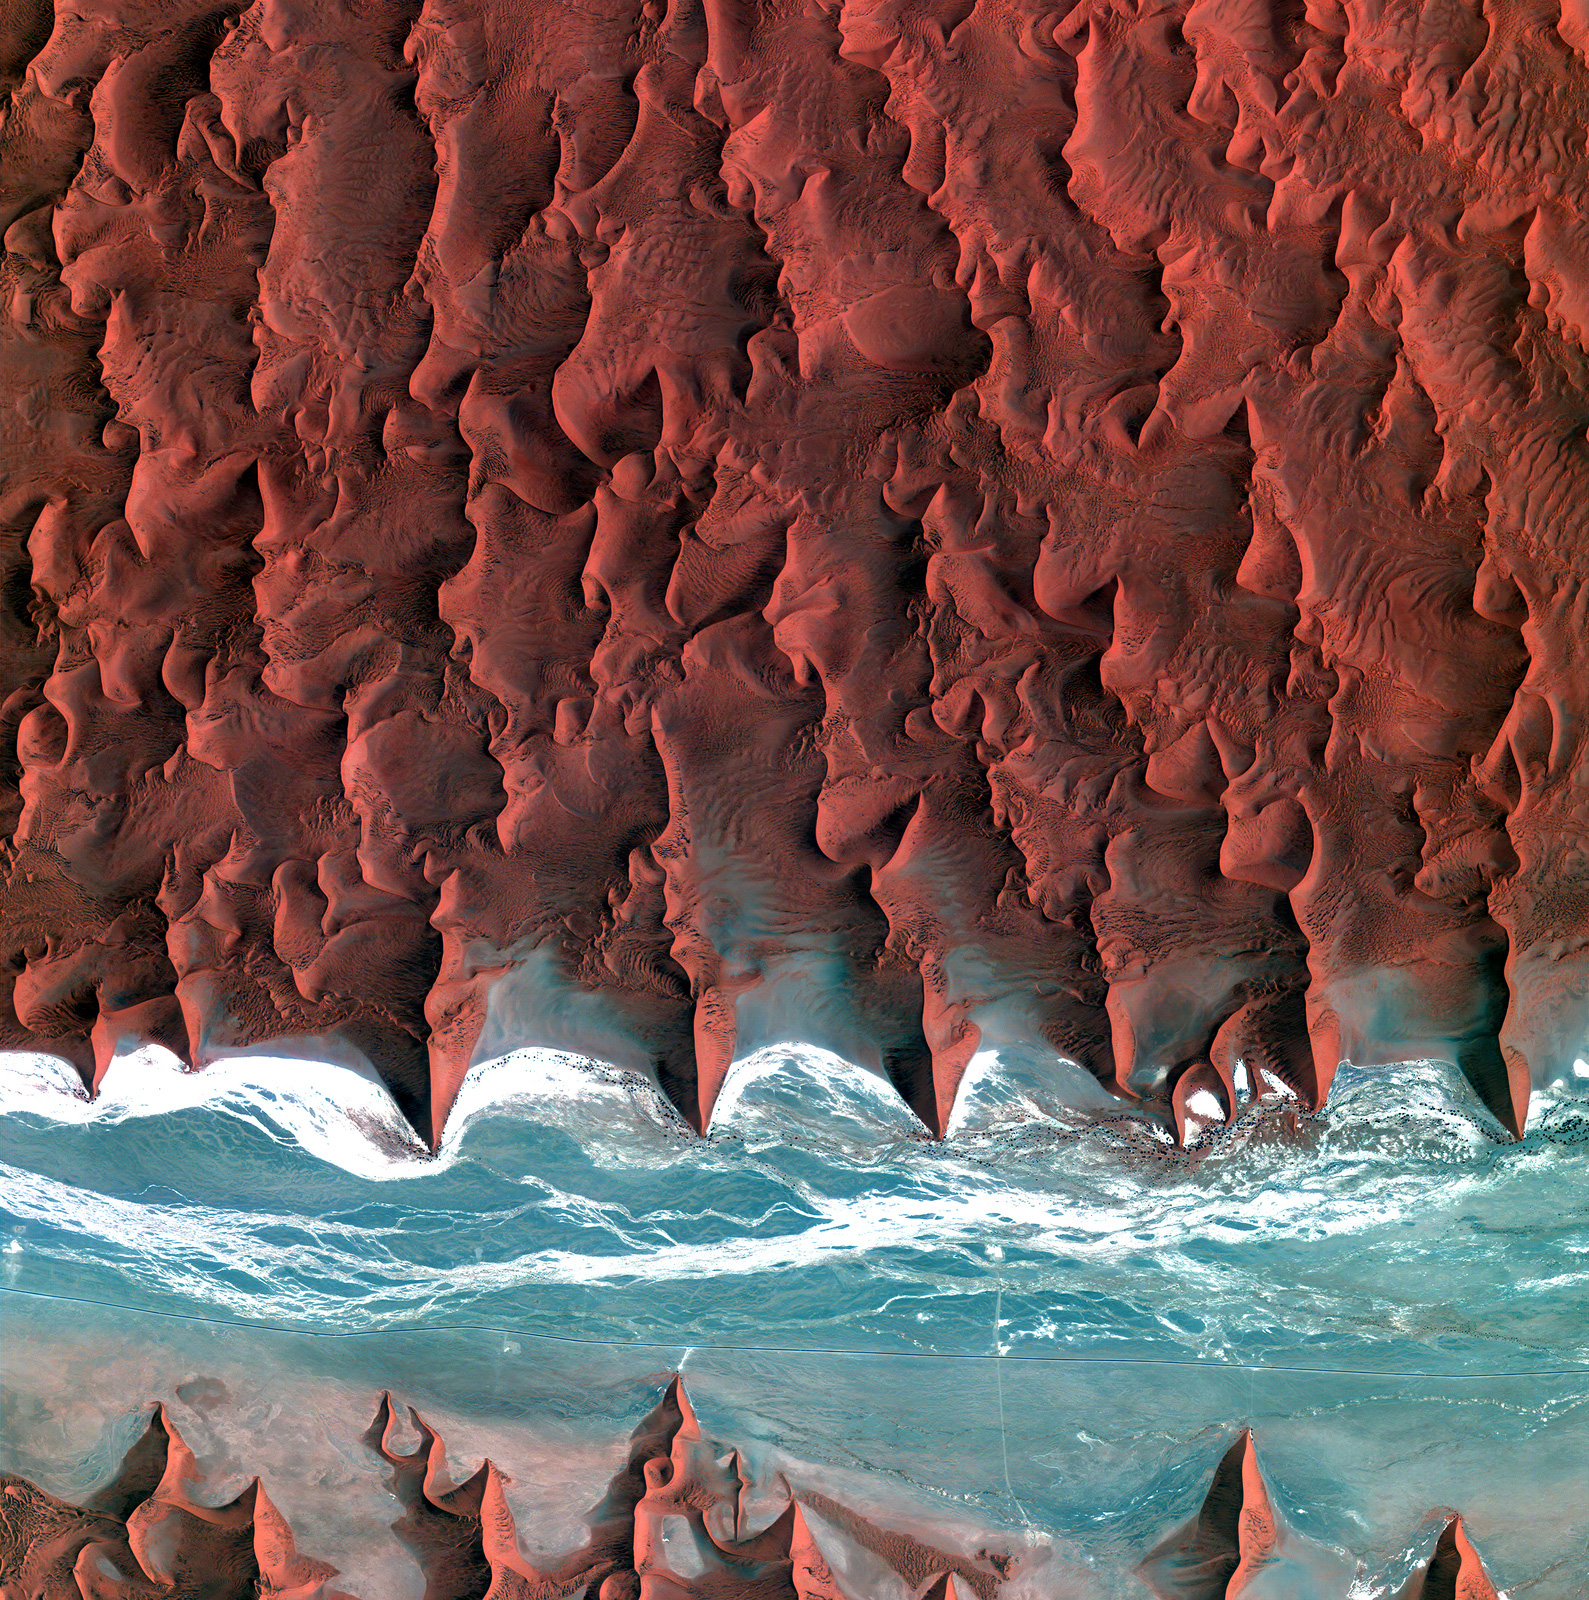 sand seas of the namibia desert, south korea's kompsat-2 satellite